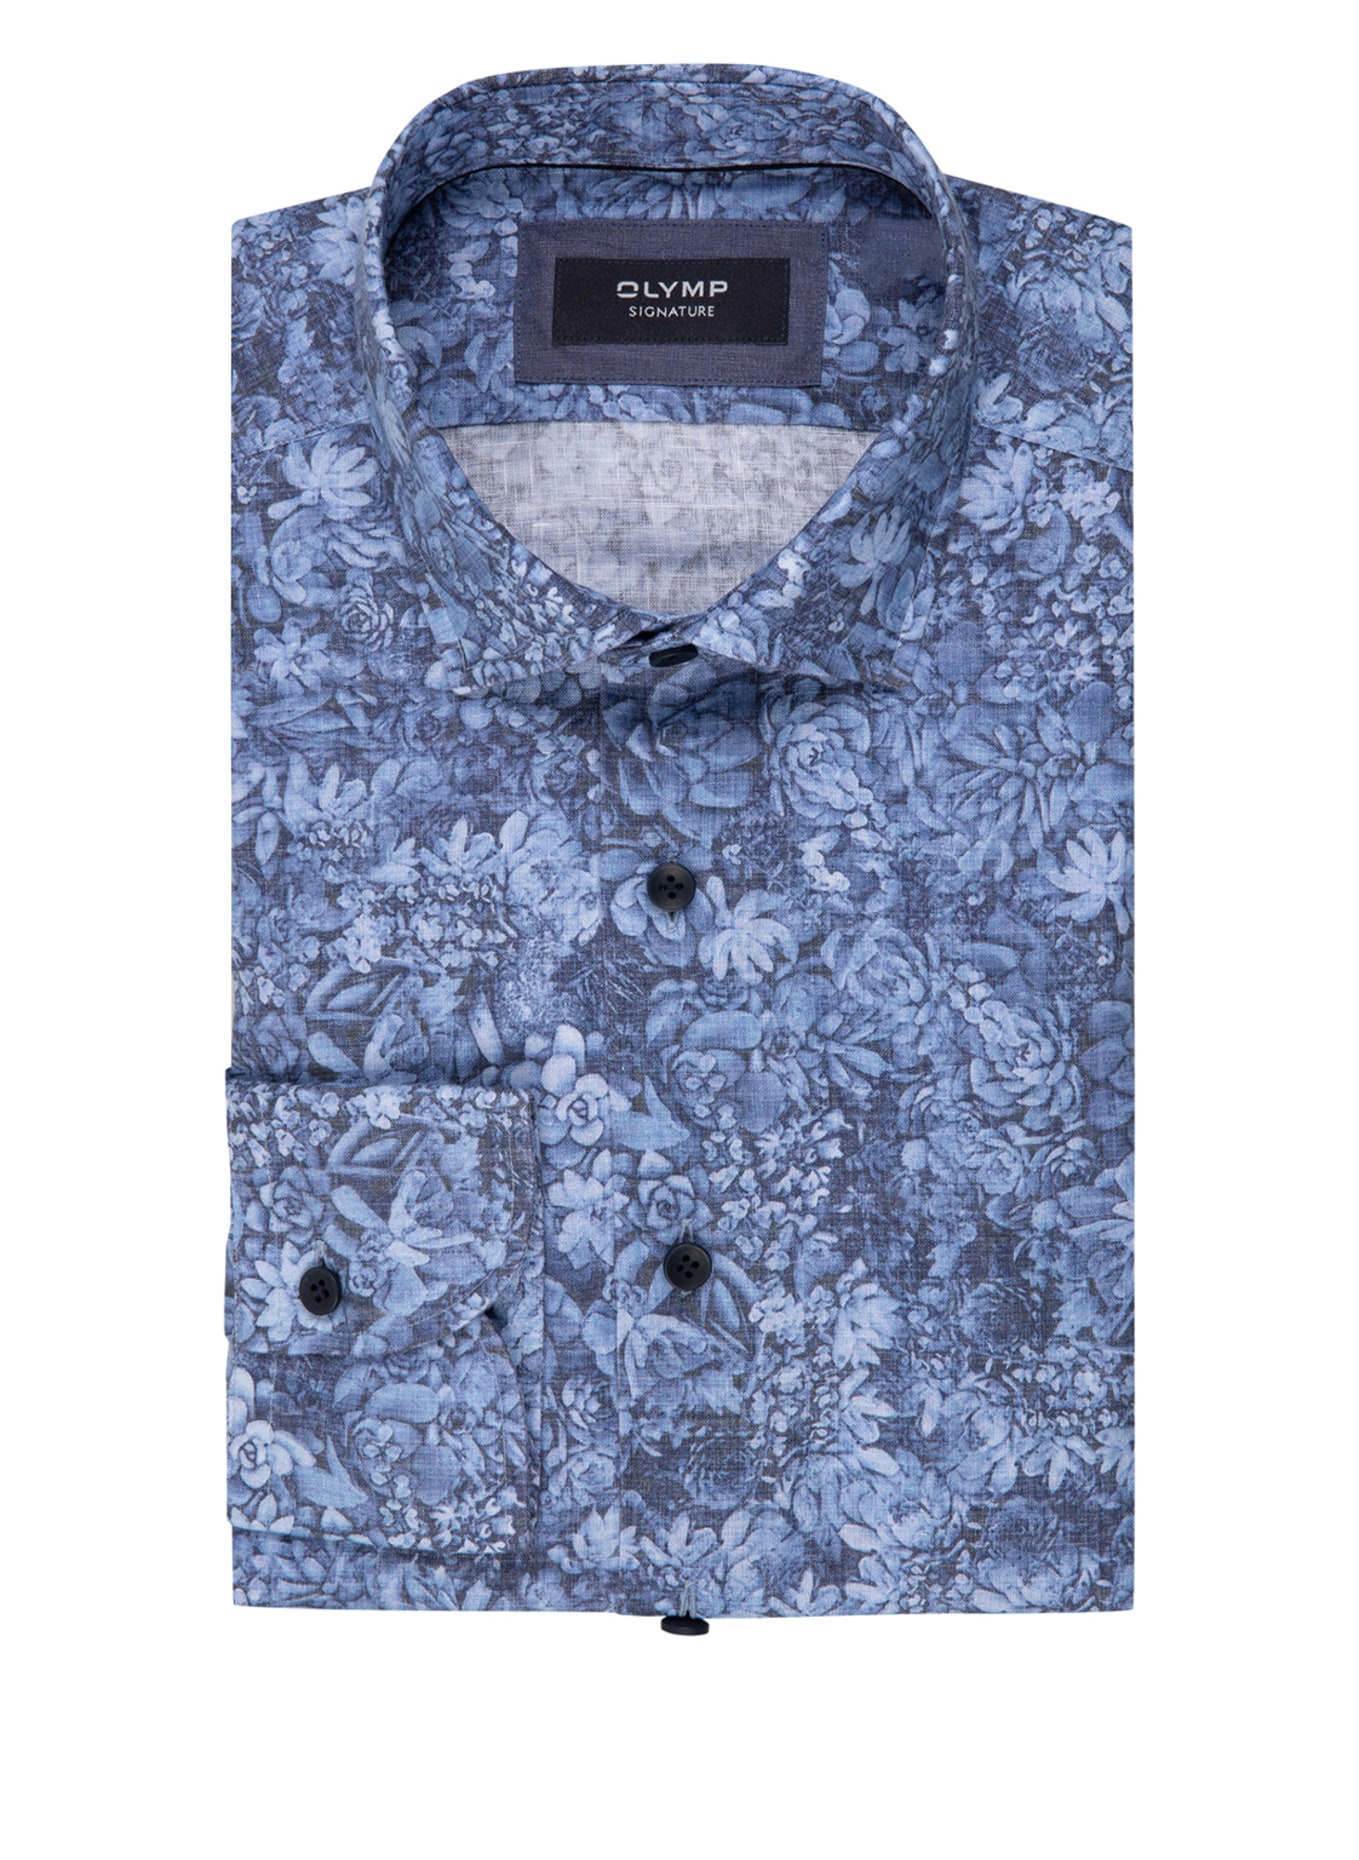 OLYMP SIGNATURE Leinenhemd tailored fit, Farbe: DUNKELGRAU/ HELLBLAU/ WEISS (Bild 1)